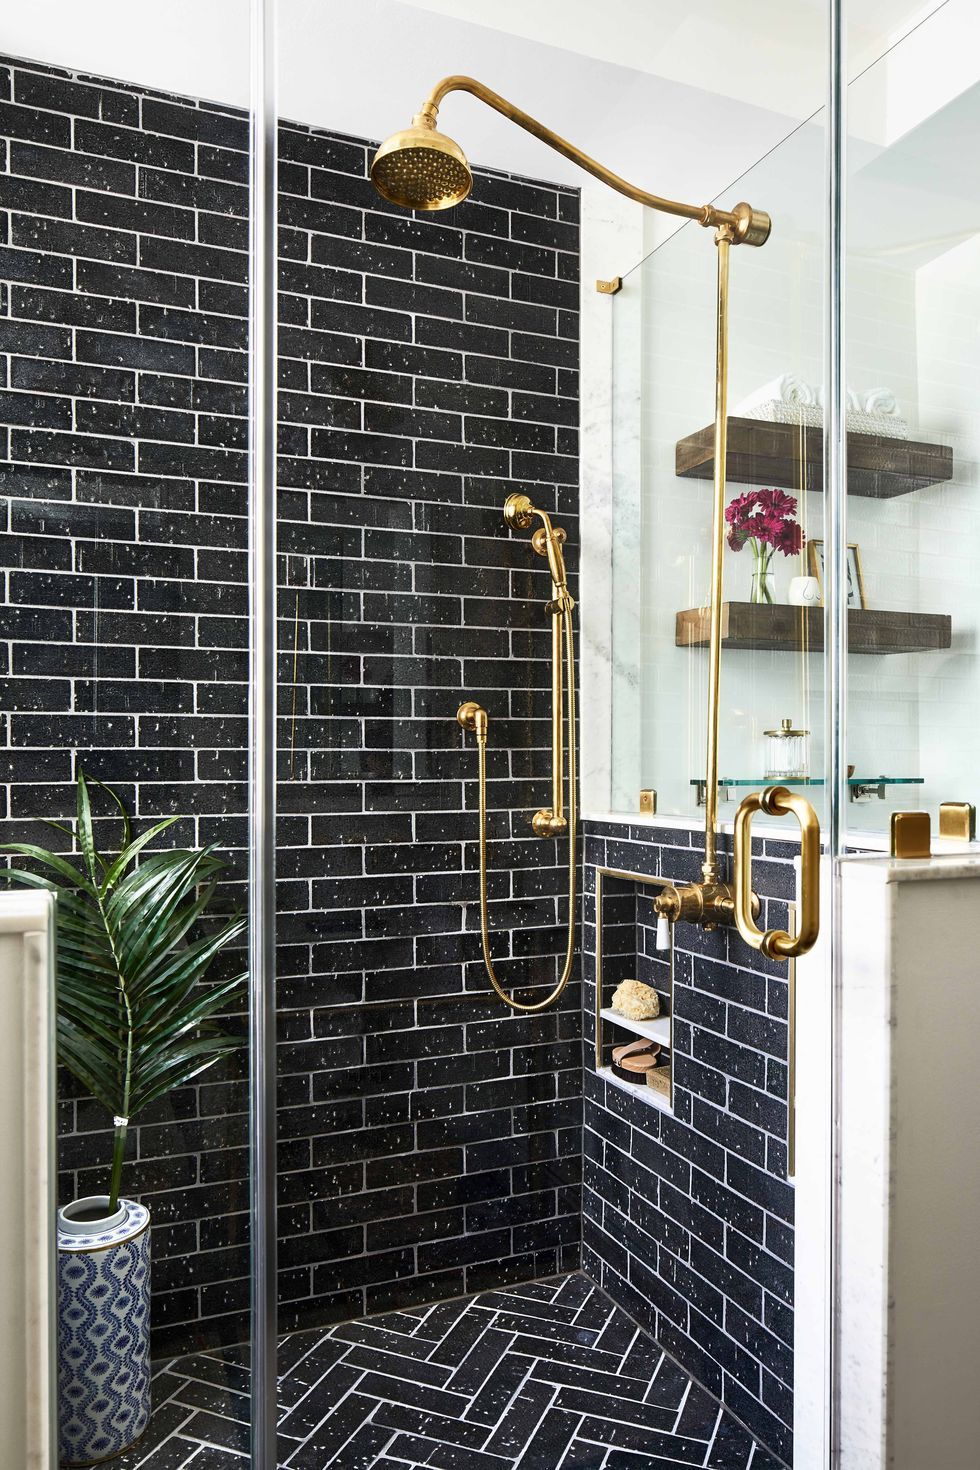 img/bathroom-tile-designs-2016-de.jpg